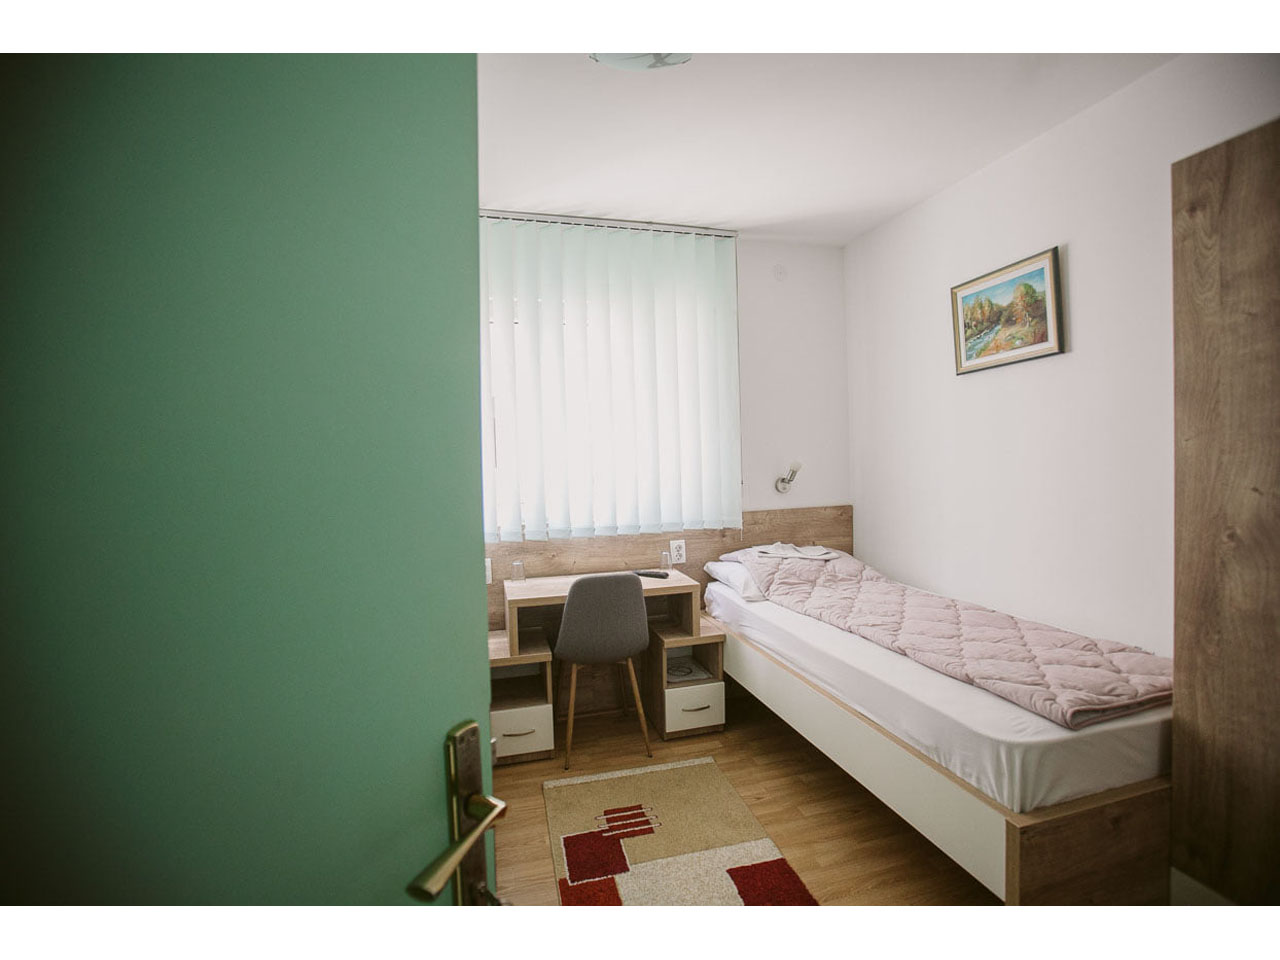 ACCOMMODATION AND RESTAURANT IZVORI Private accommodation Gornja Trepca - Photo 2